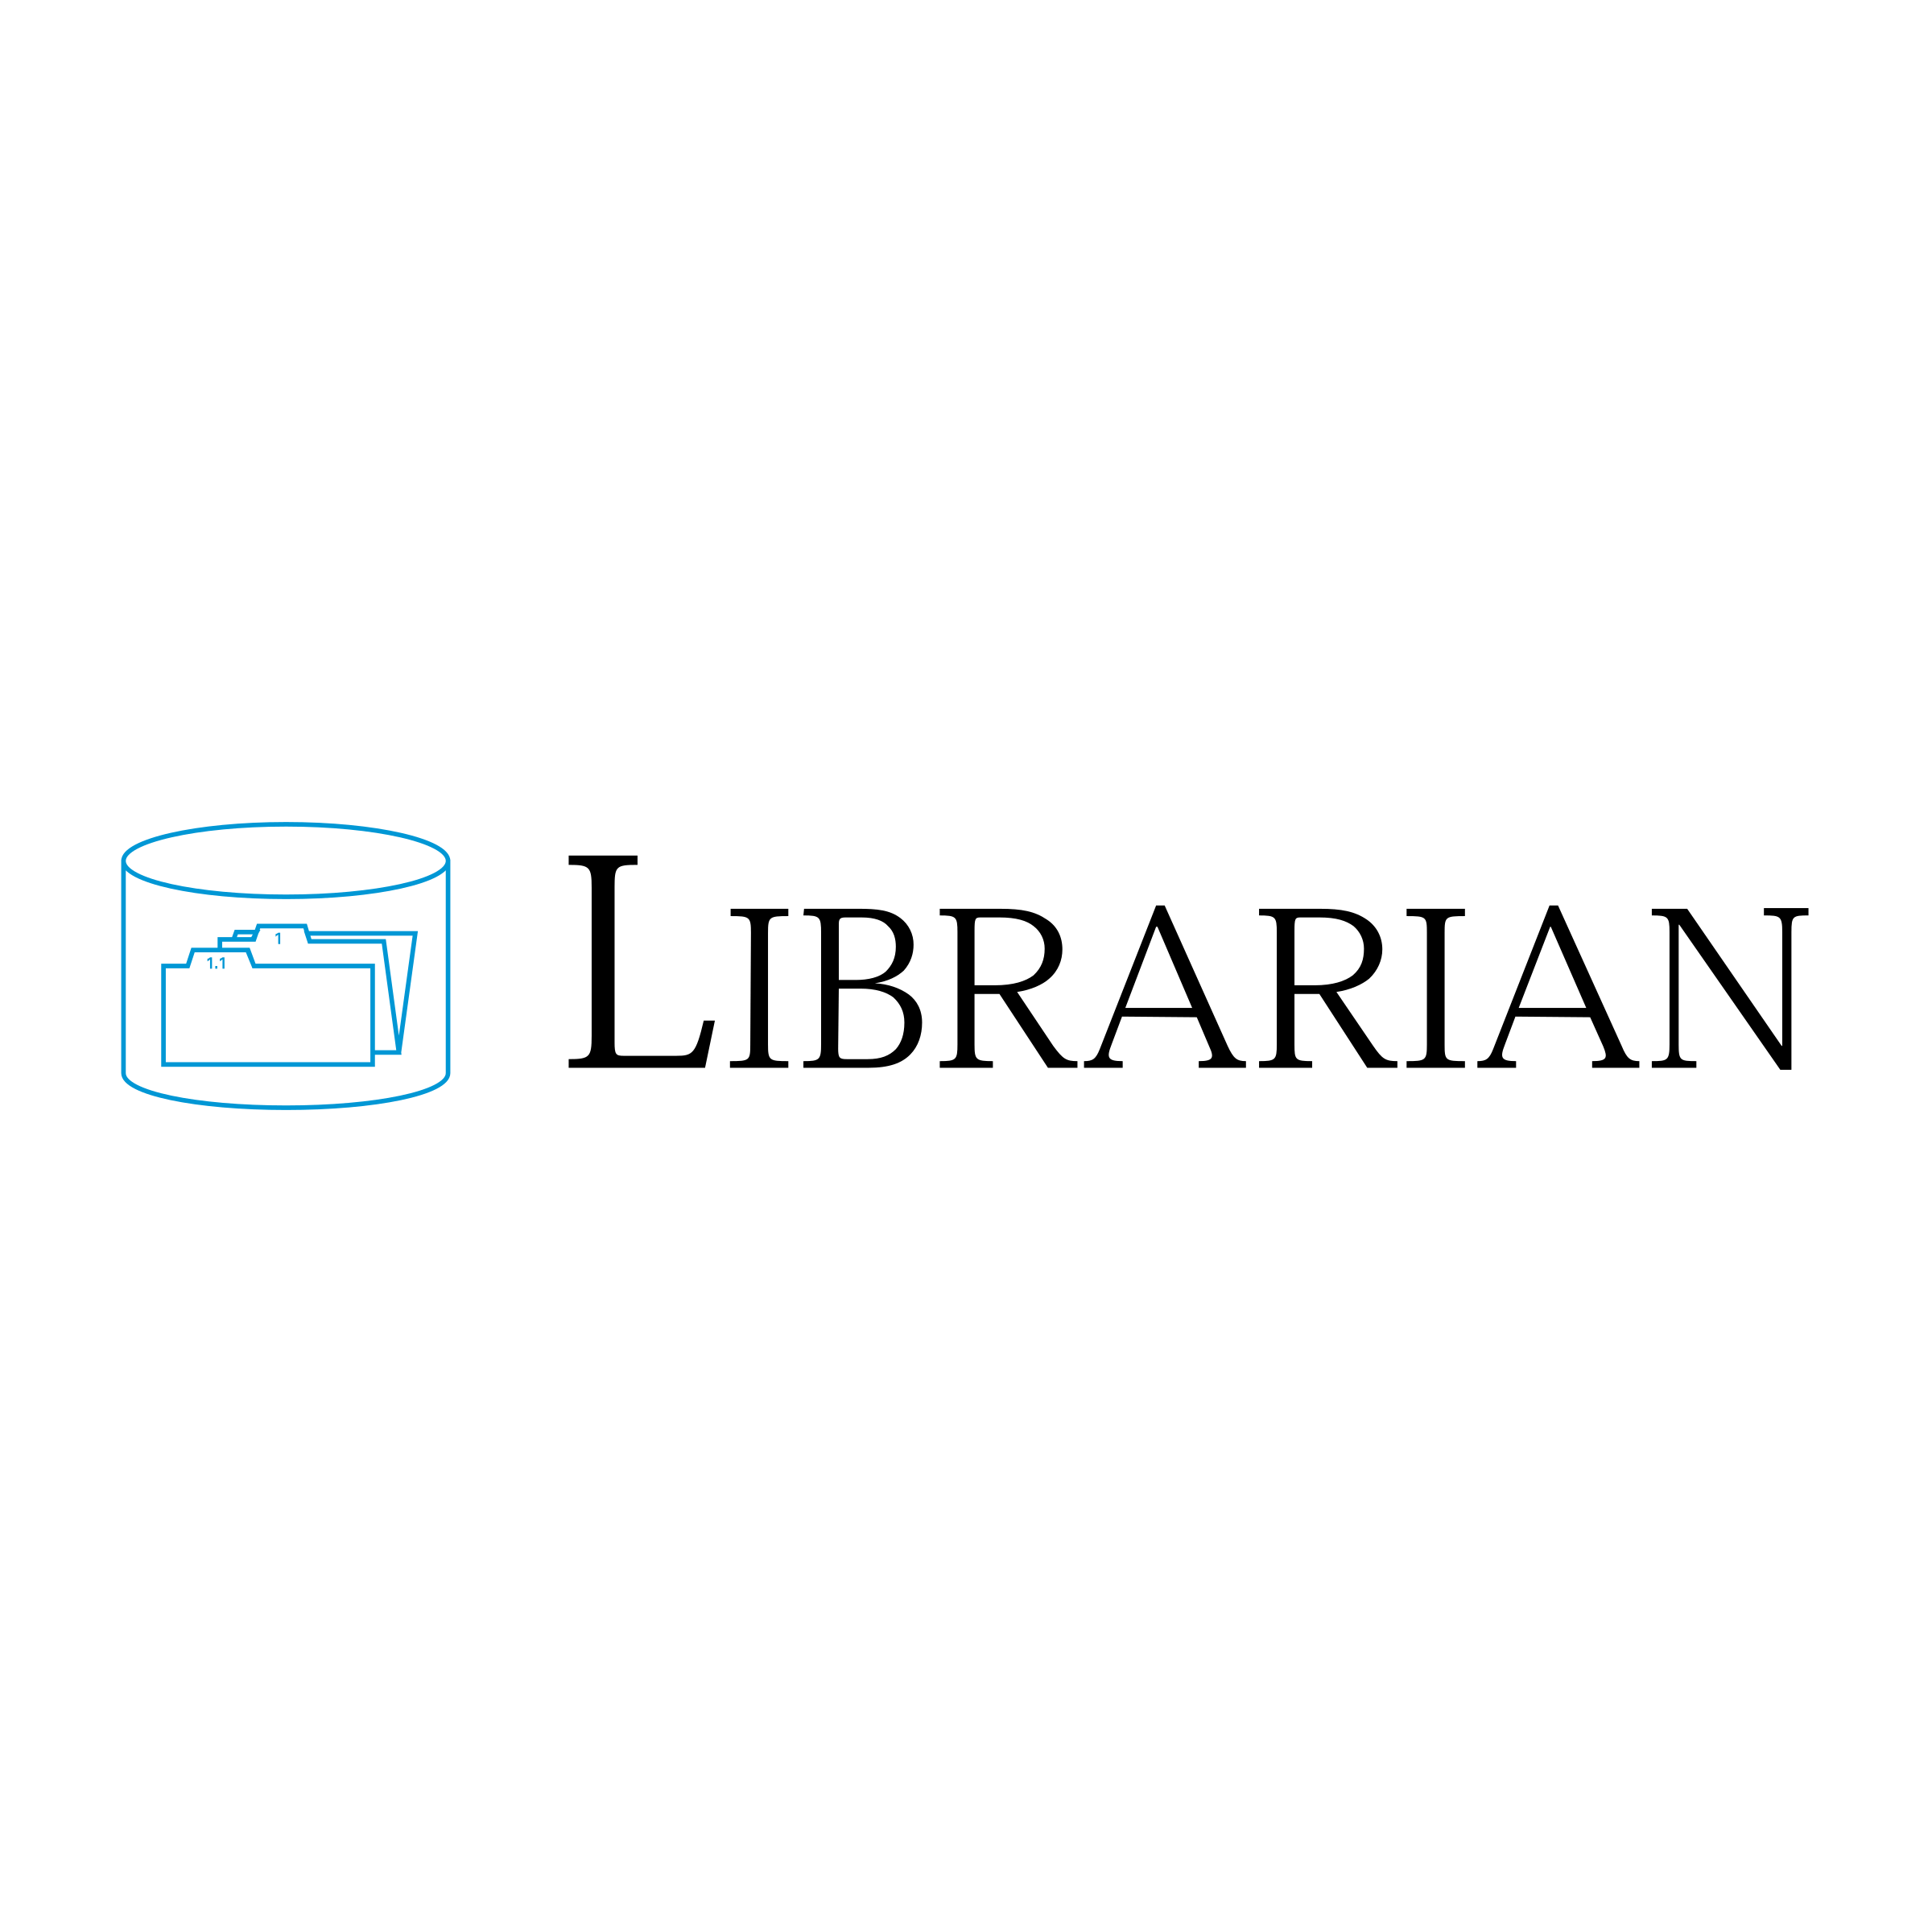 Librarian Logo - Librarian Logo PNG Transparent & SVG Vector - Freebie Supply